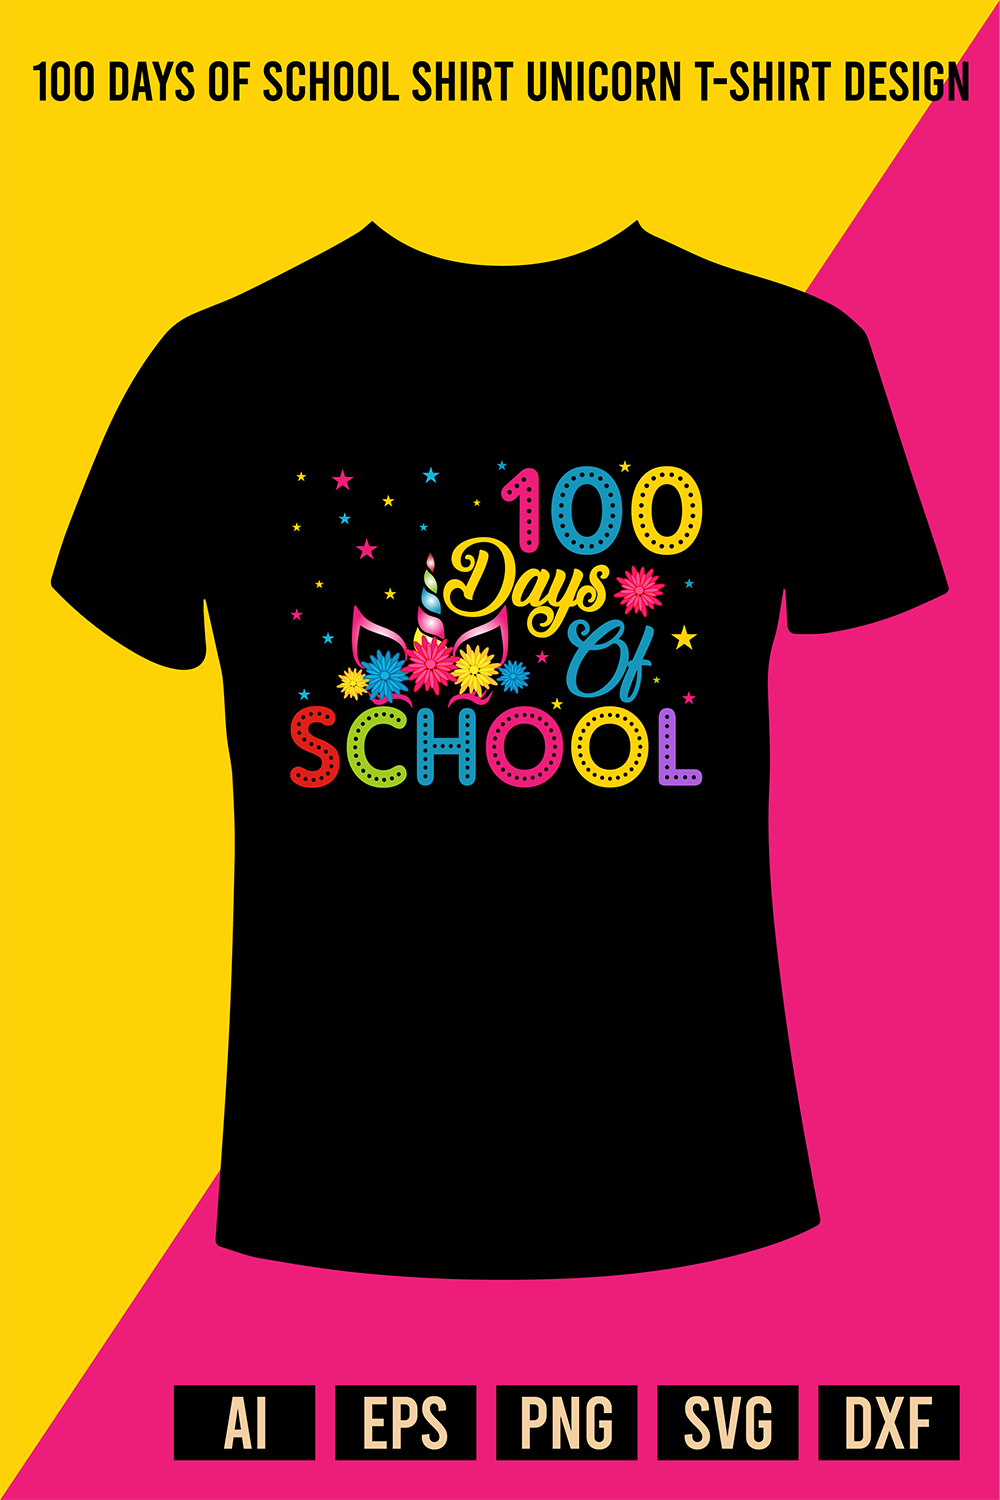 100 Days Of School Shirt Unicorn T-Shirt Design pinterest preview image.